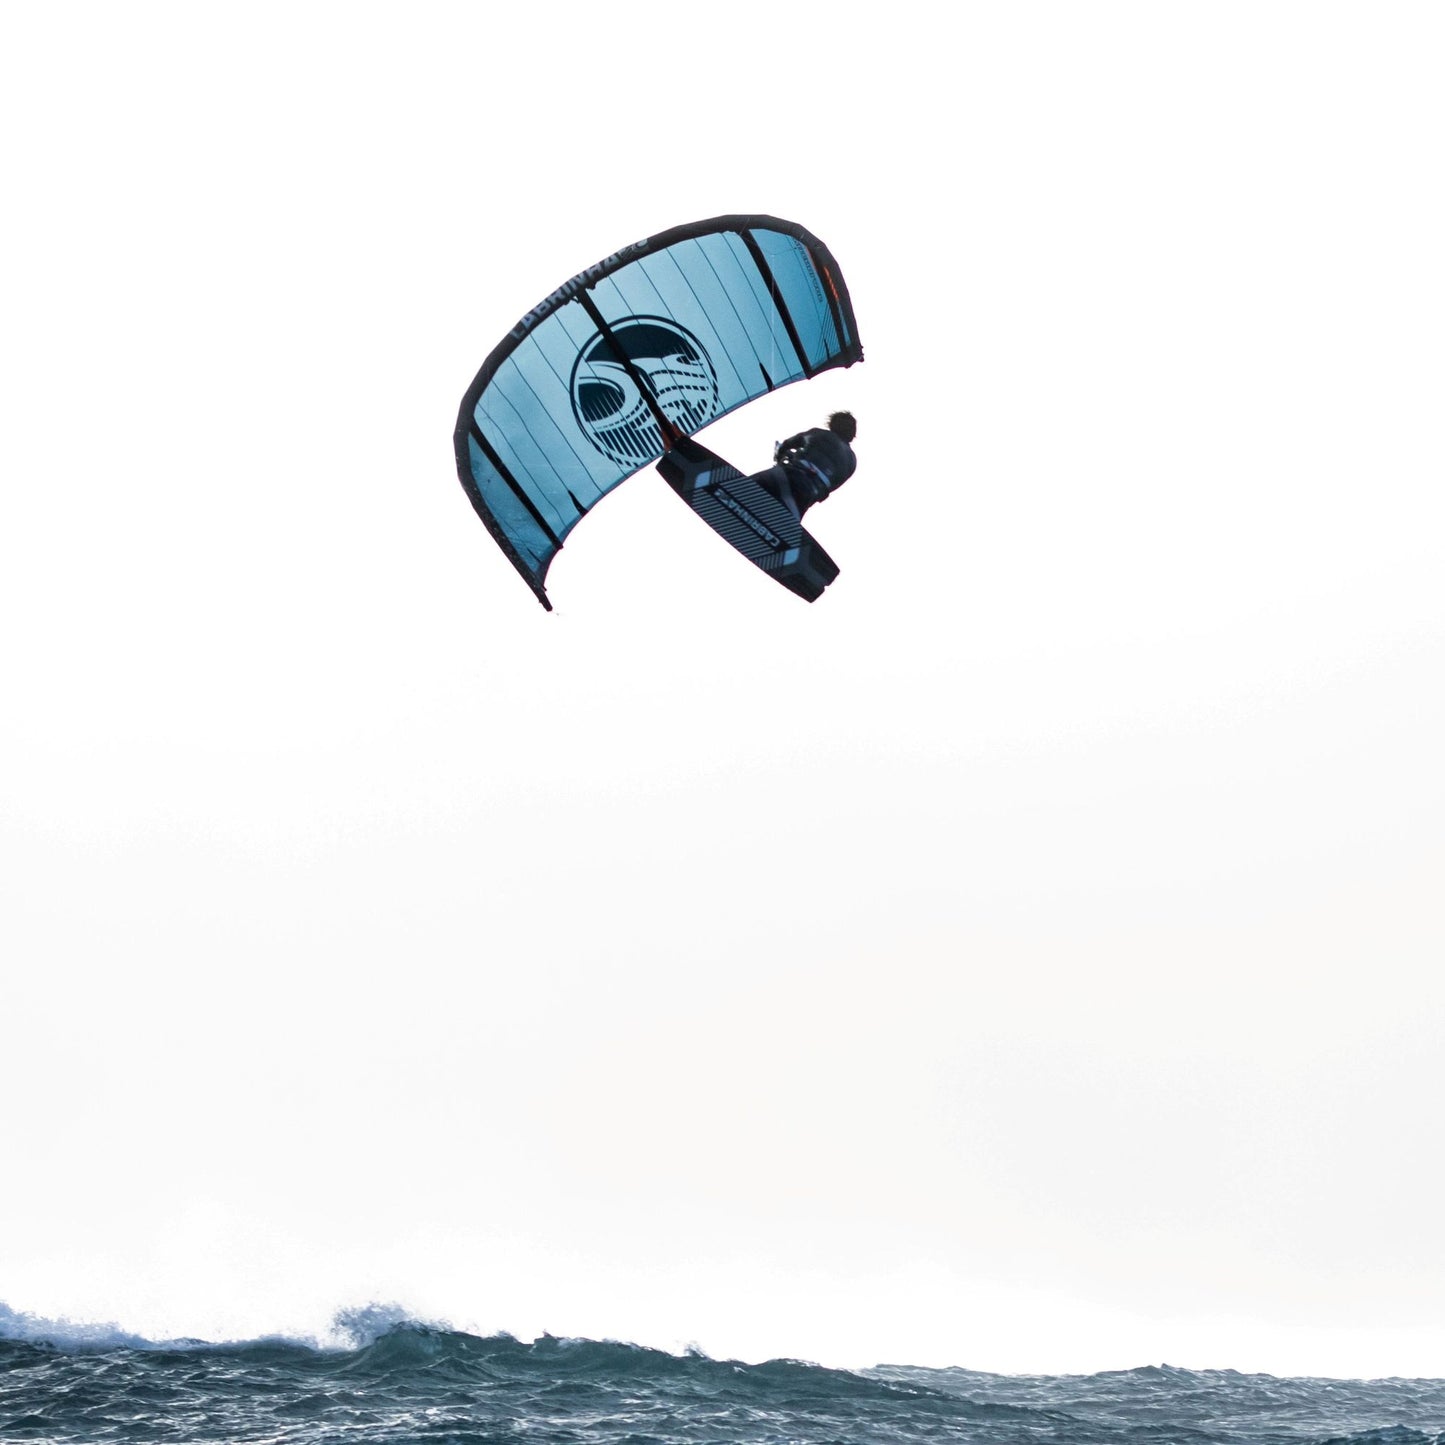 2020 Cabrinha Switchblade Performance Freeride / Big Air Kite 8M